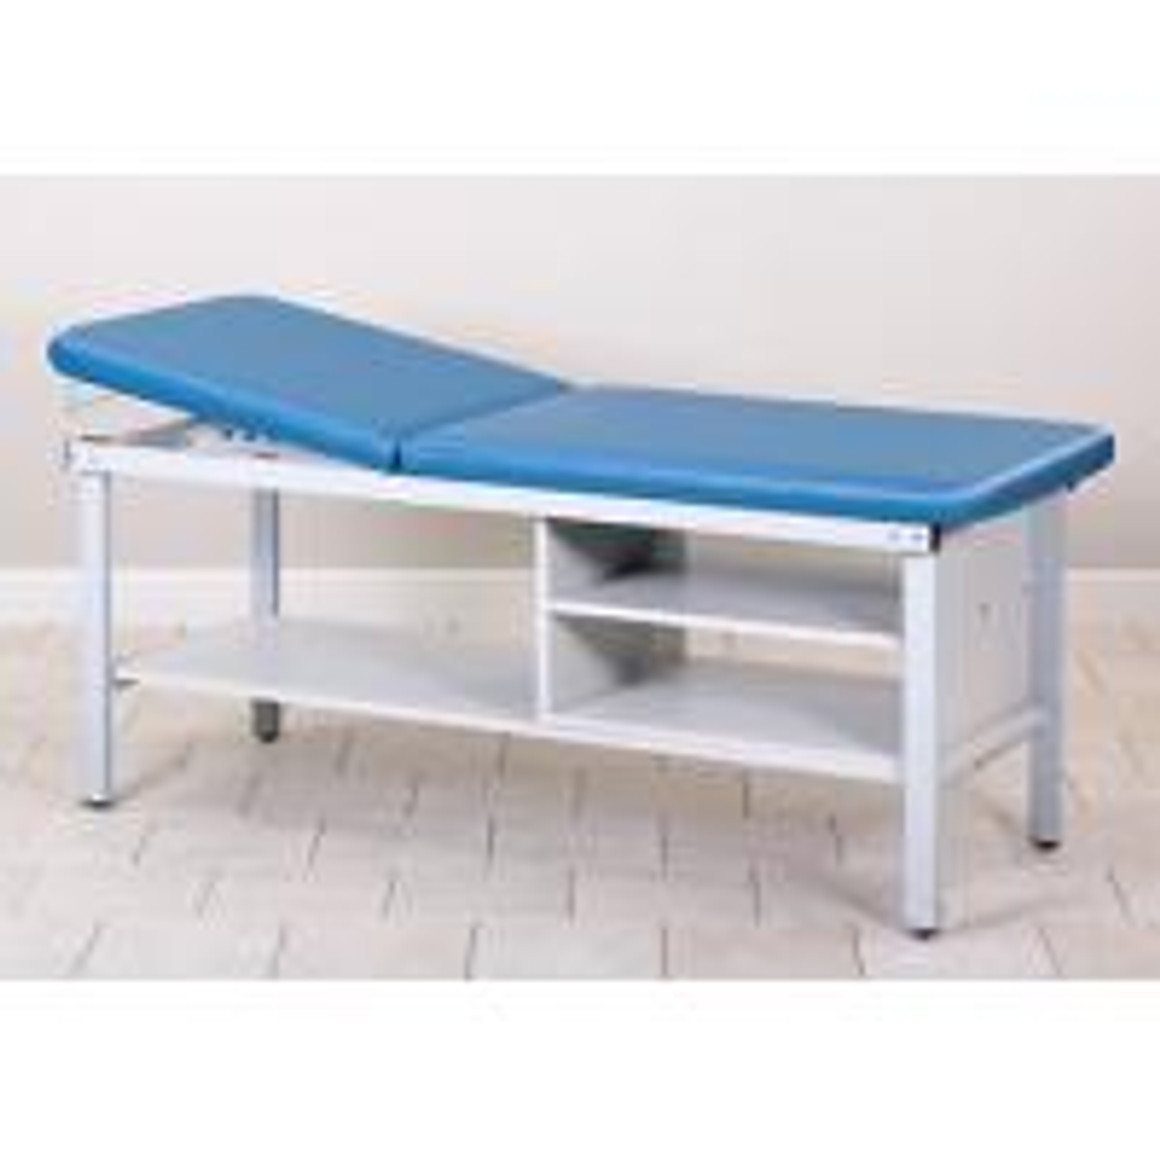 Clinton ETA Alpha Series Straight Line Treatment Table with Shelving Unit, 30" Wide, Purplegray